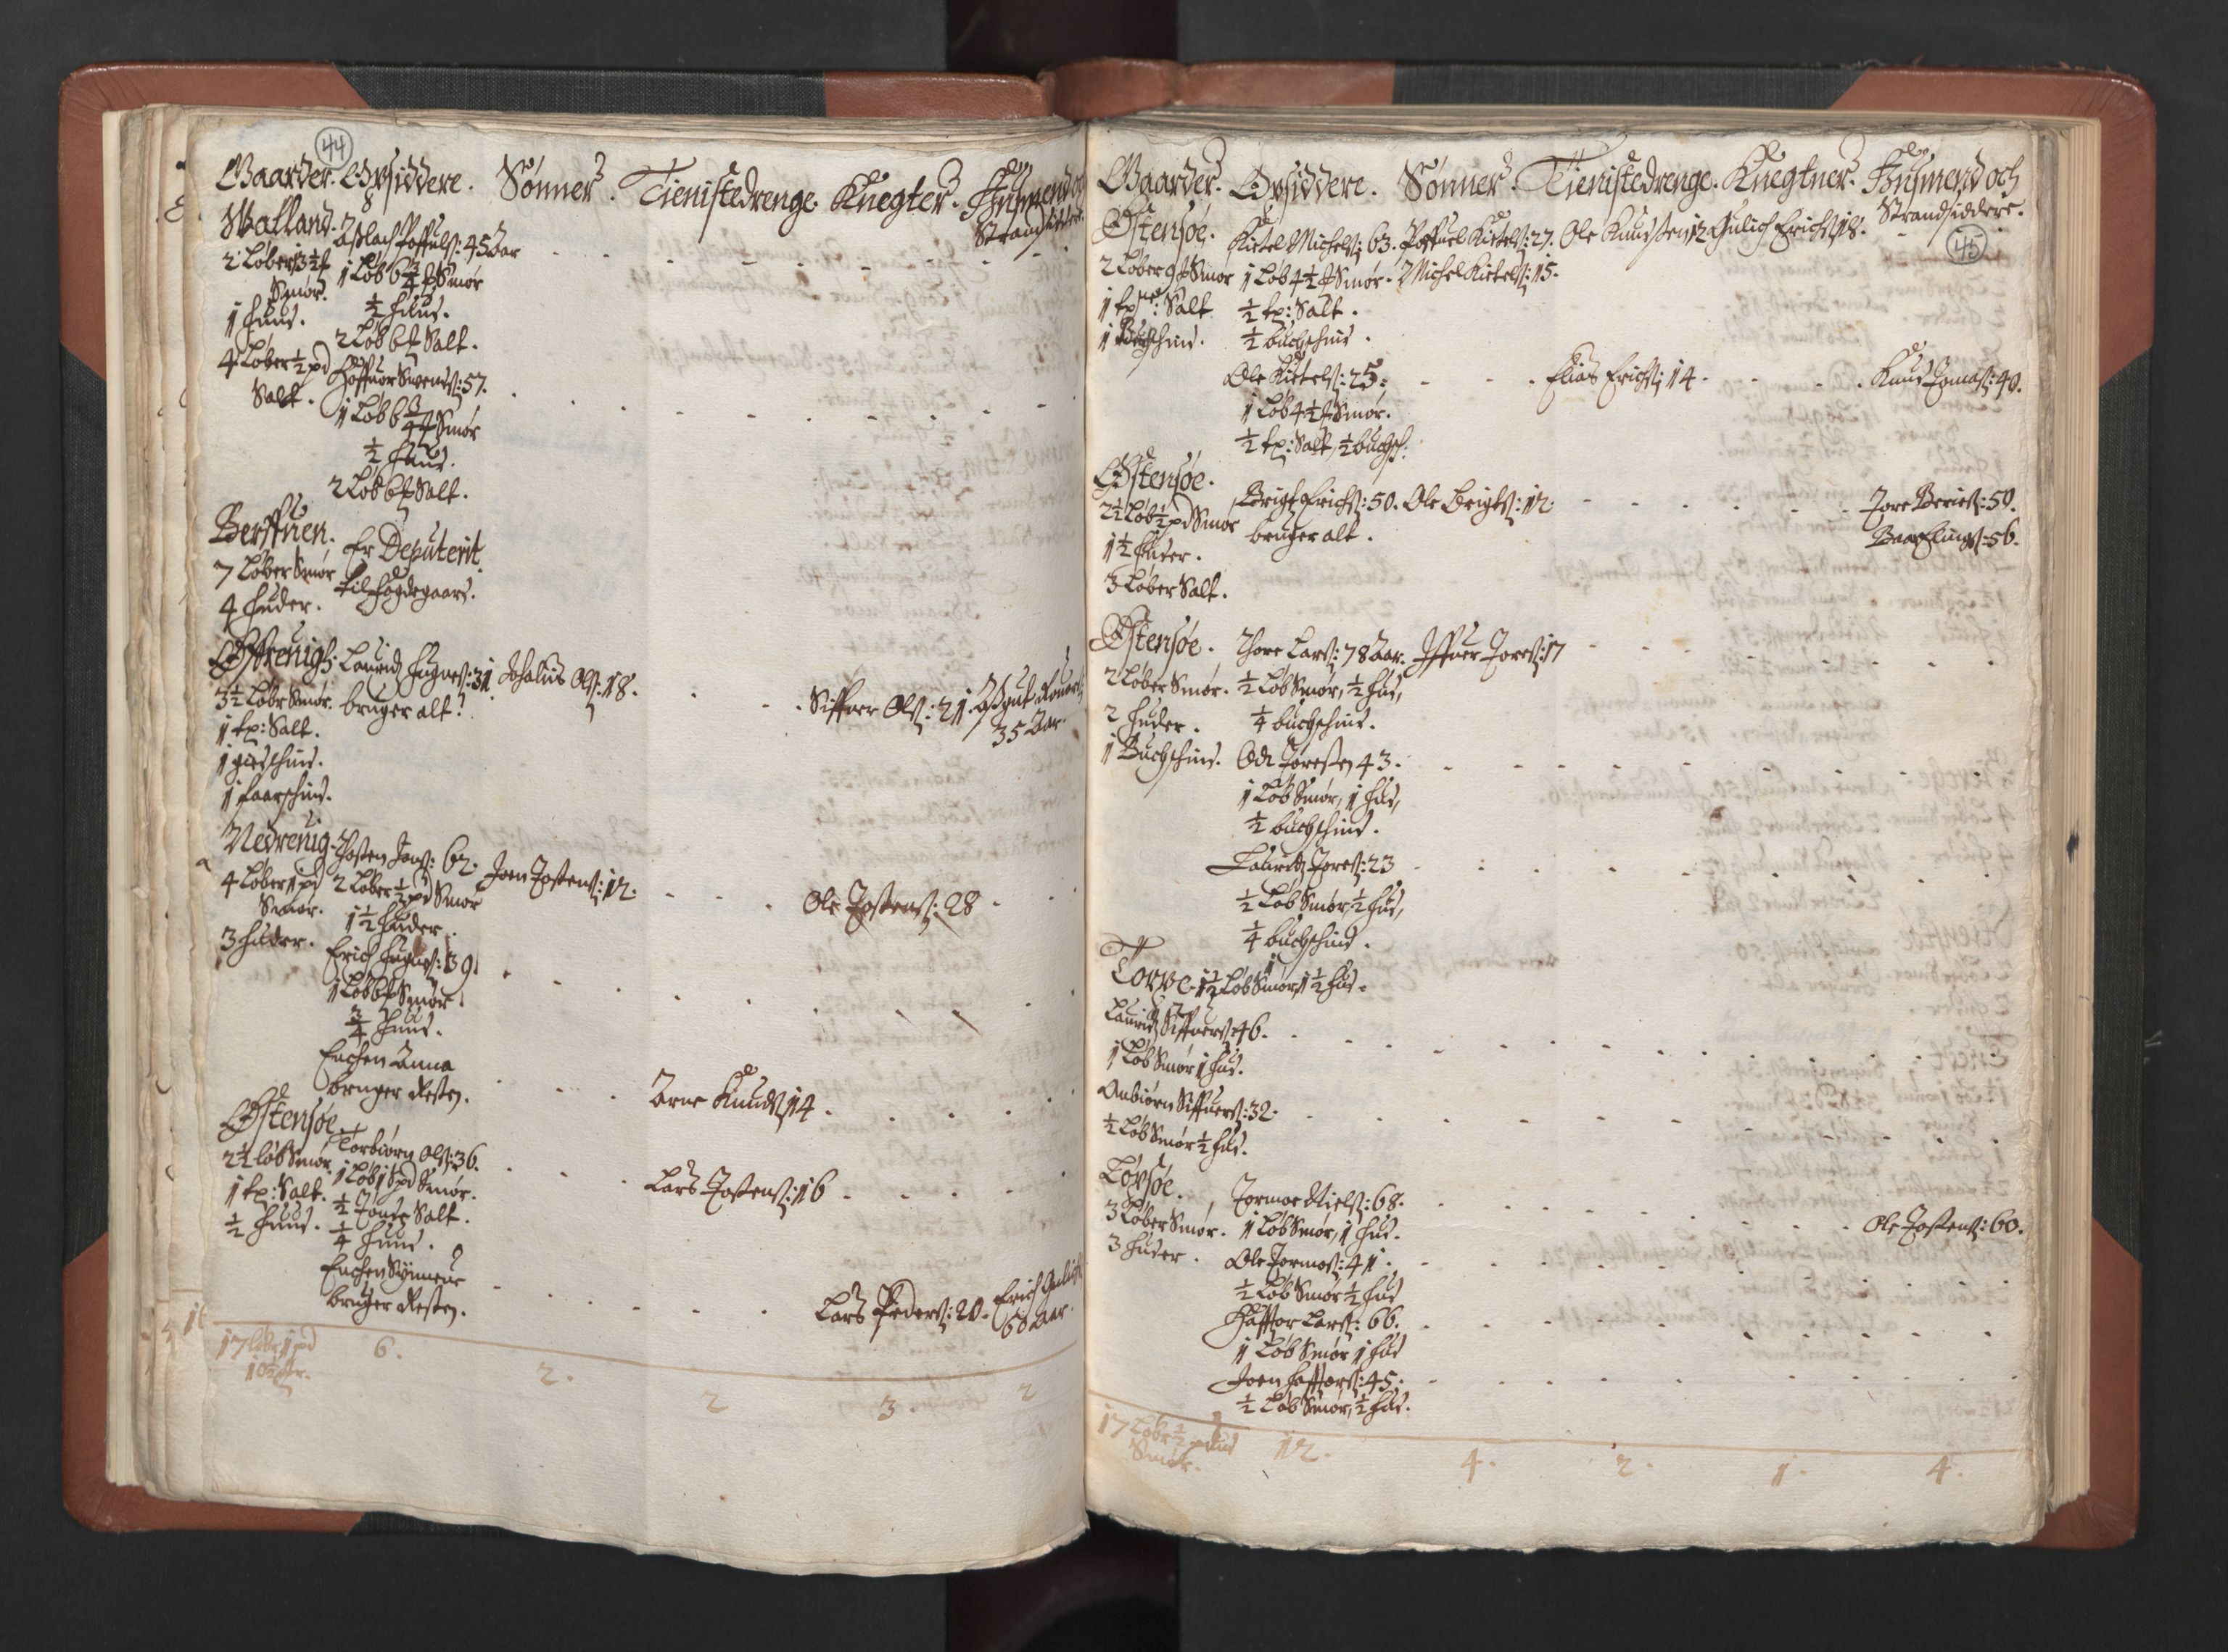 RA, Fogdenes og sorenskrivernes manntall 1664-1666, nr. 14: Hardanger len, Ytre Sogn fogderi og Indre Sogn fogderi, 1664-1665, s. 44-45